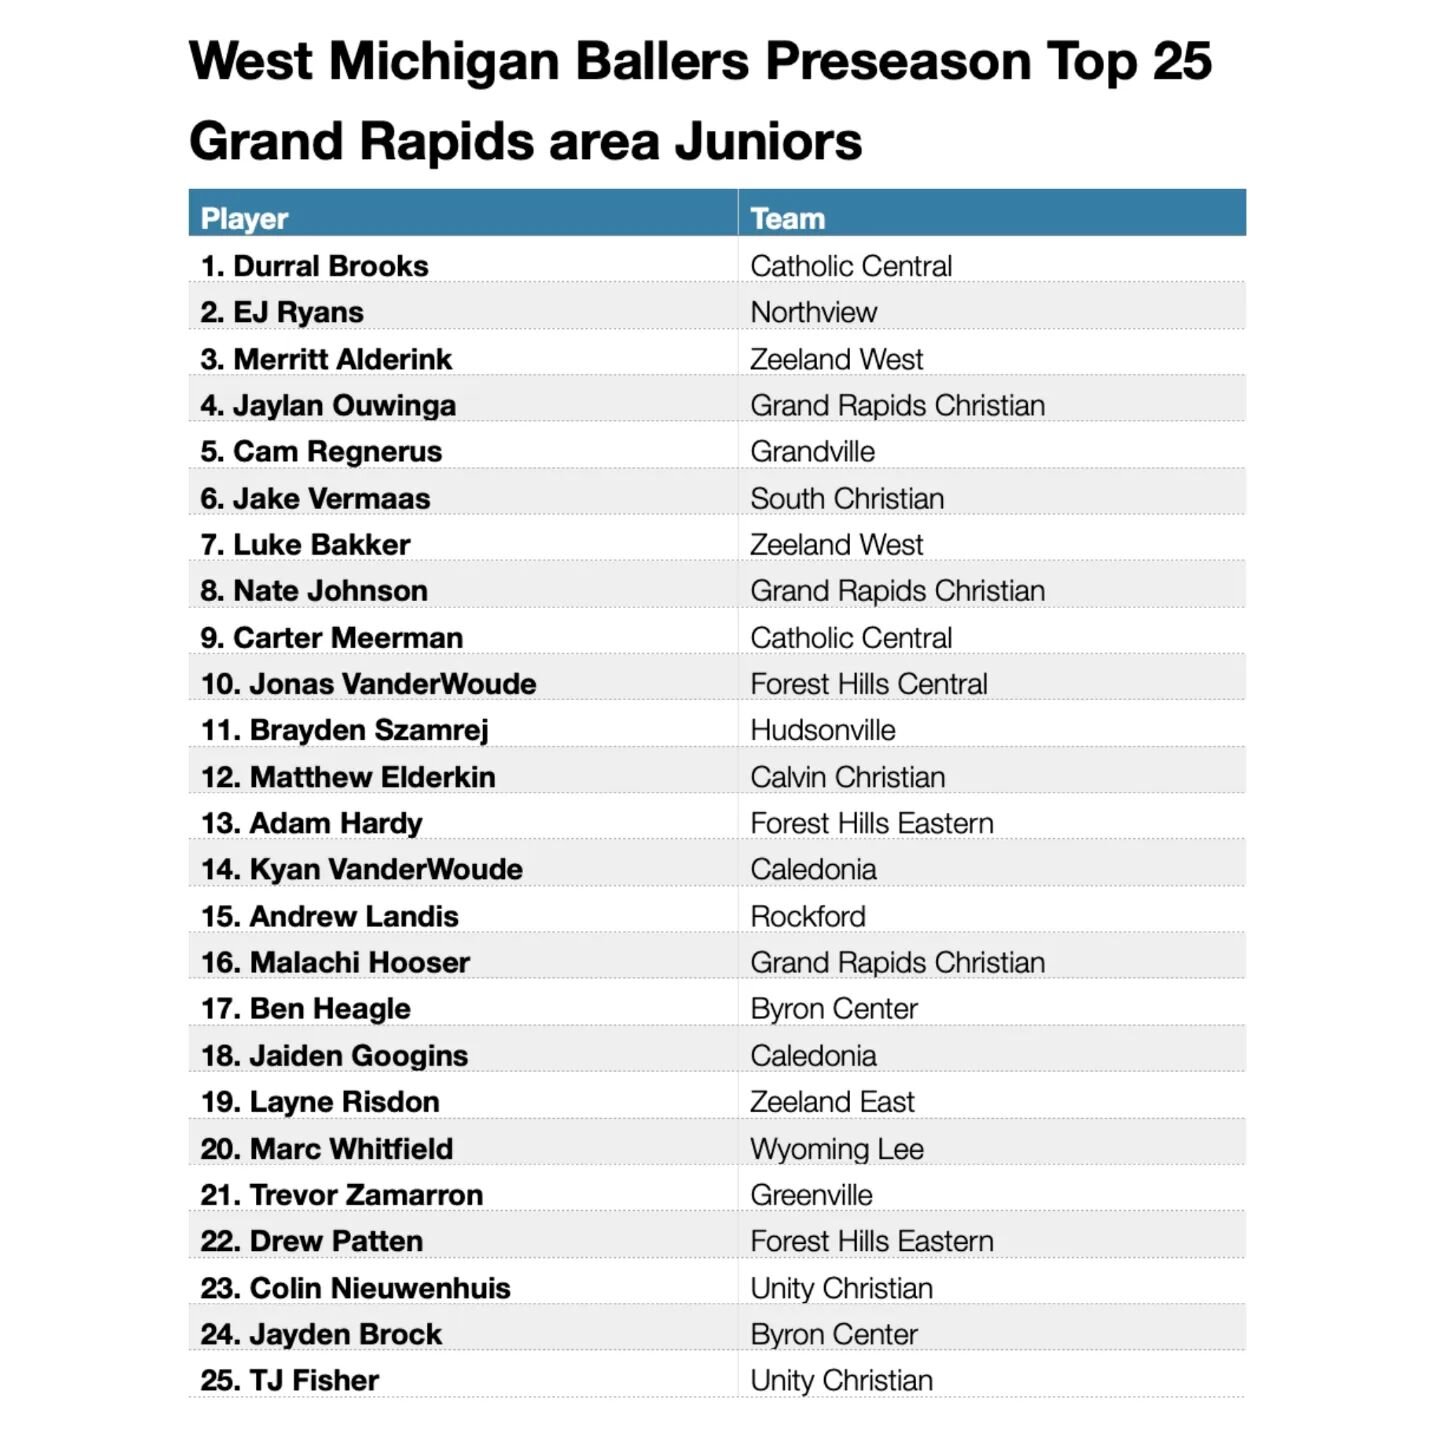 Preseason Top 25 juniors in the greater Grand Rapids area.